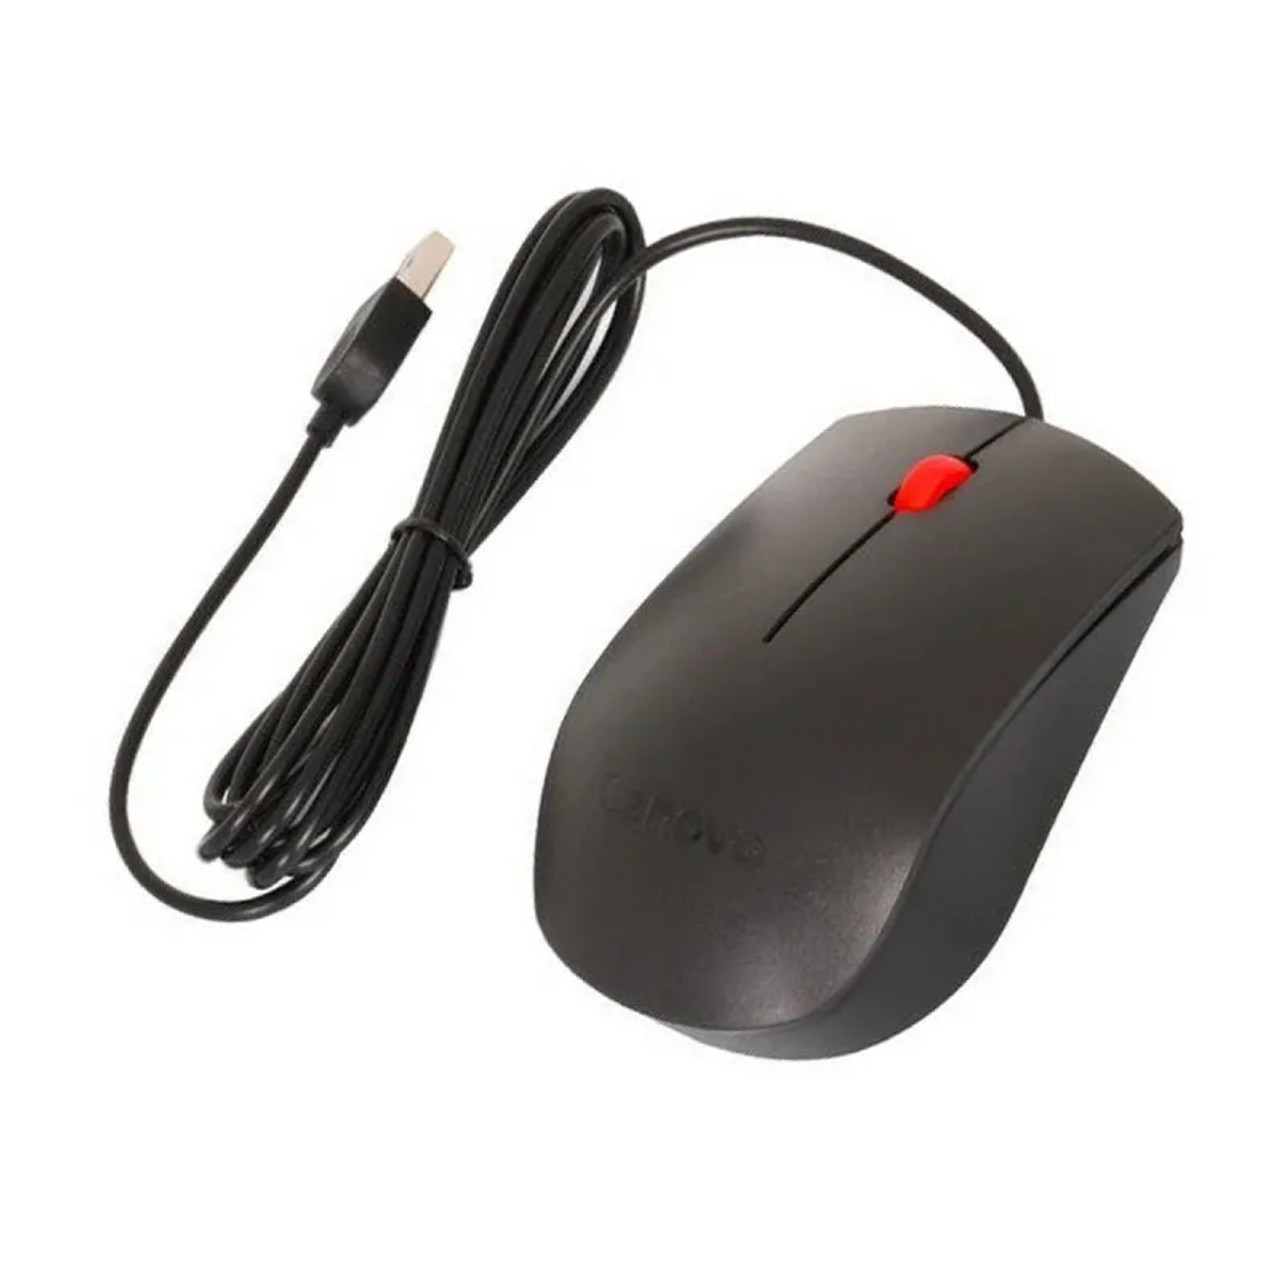 Lenovo USB Optical Mouse (MOJUUO)